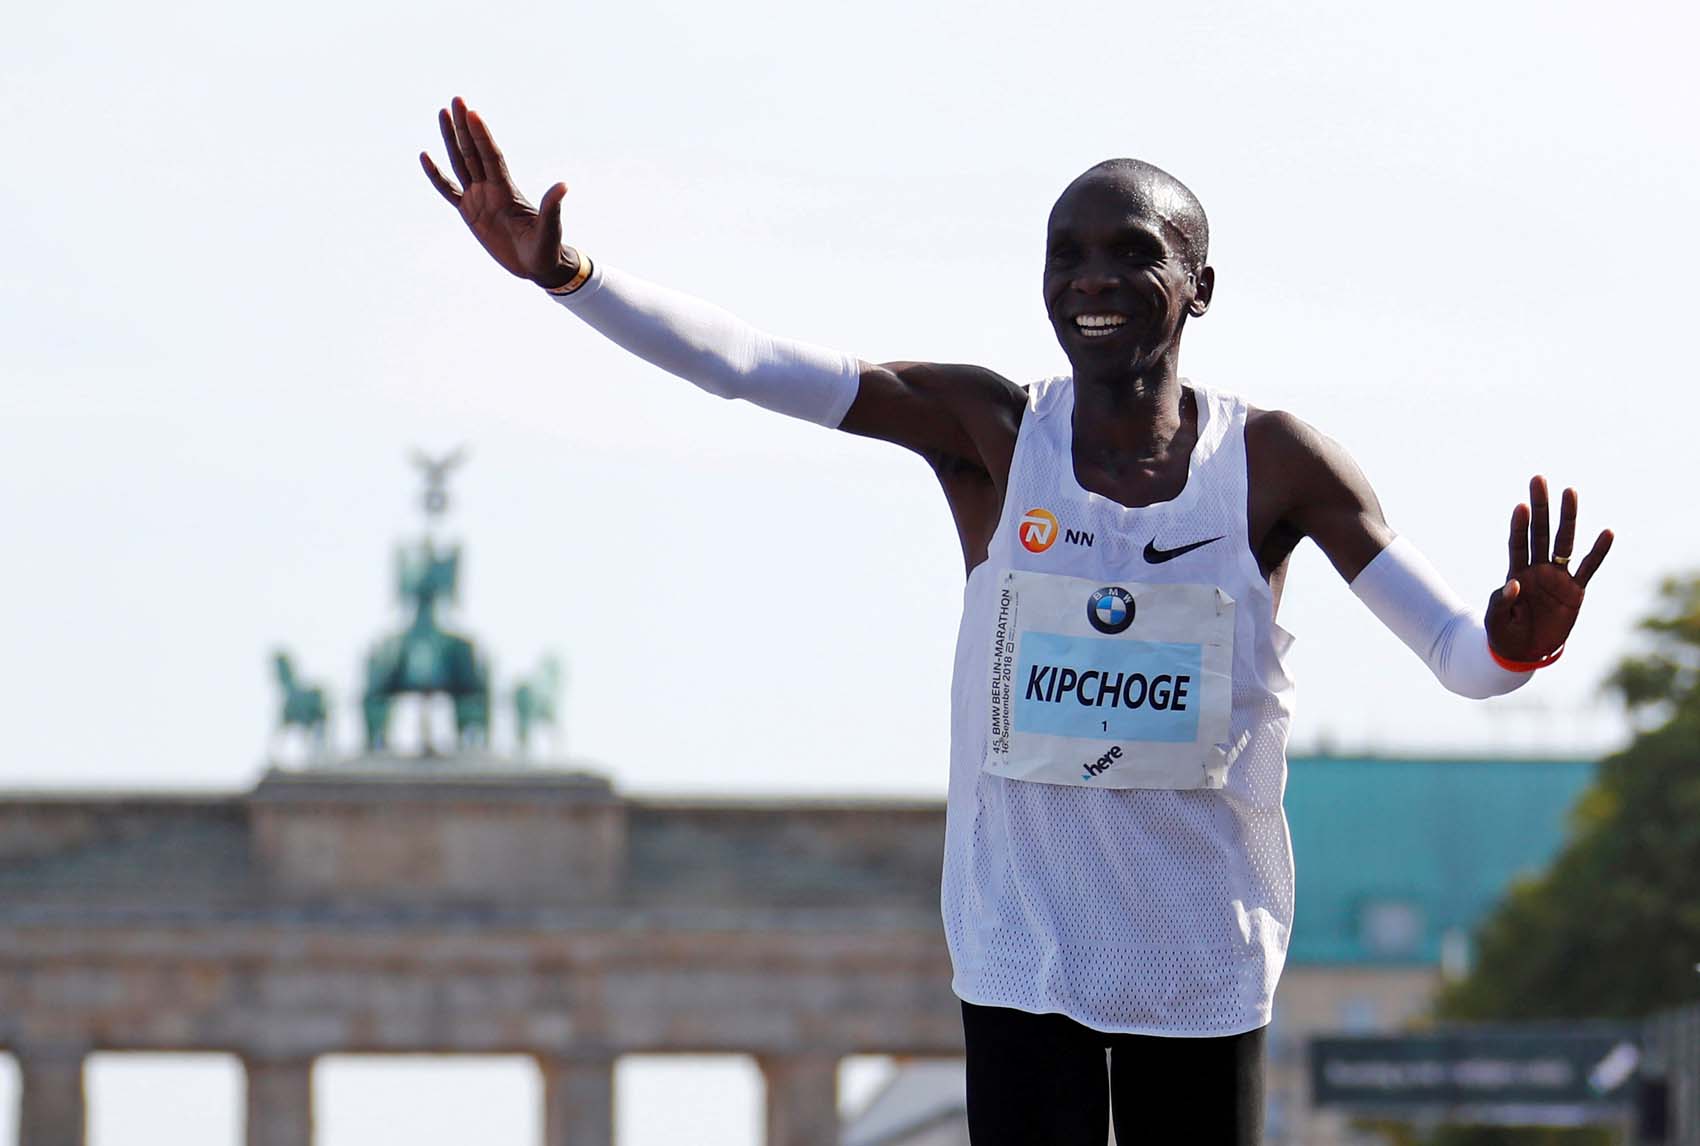 El keniano Kipchoge batió el récord mundial en maratón de Berlín